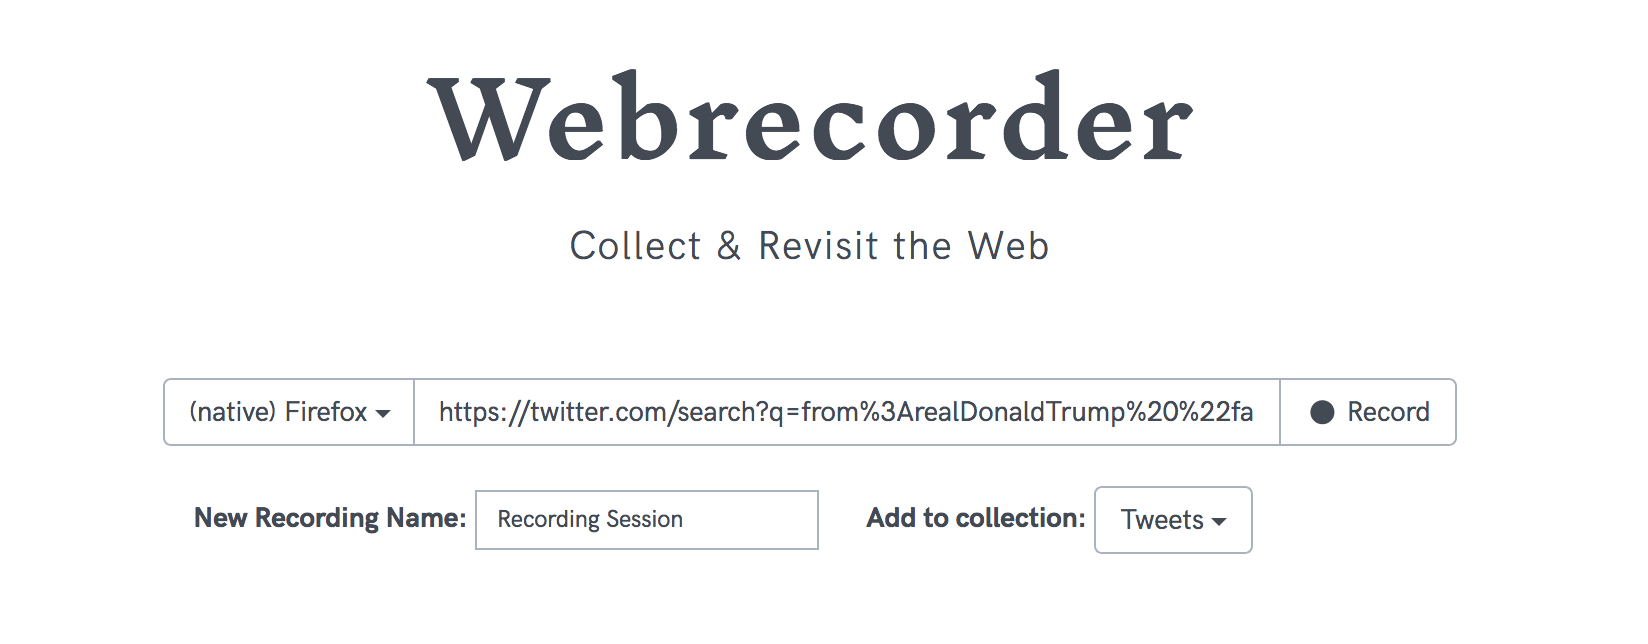 Webrecorder homepage